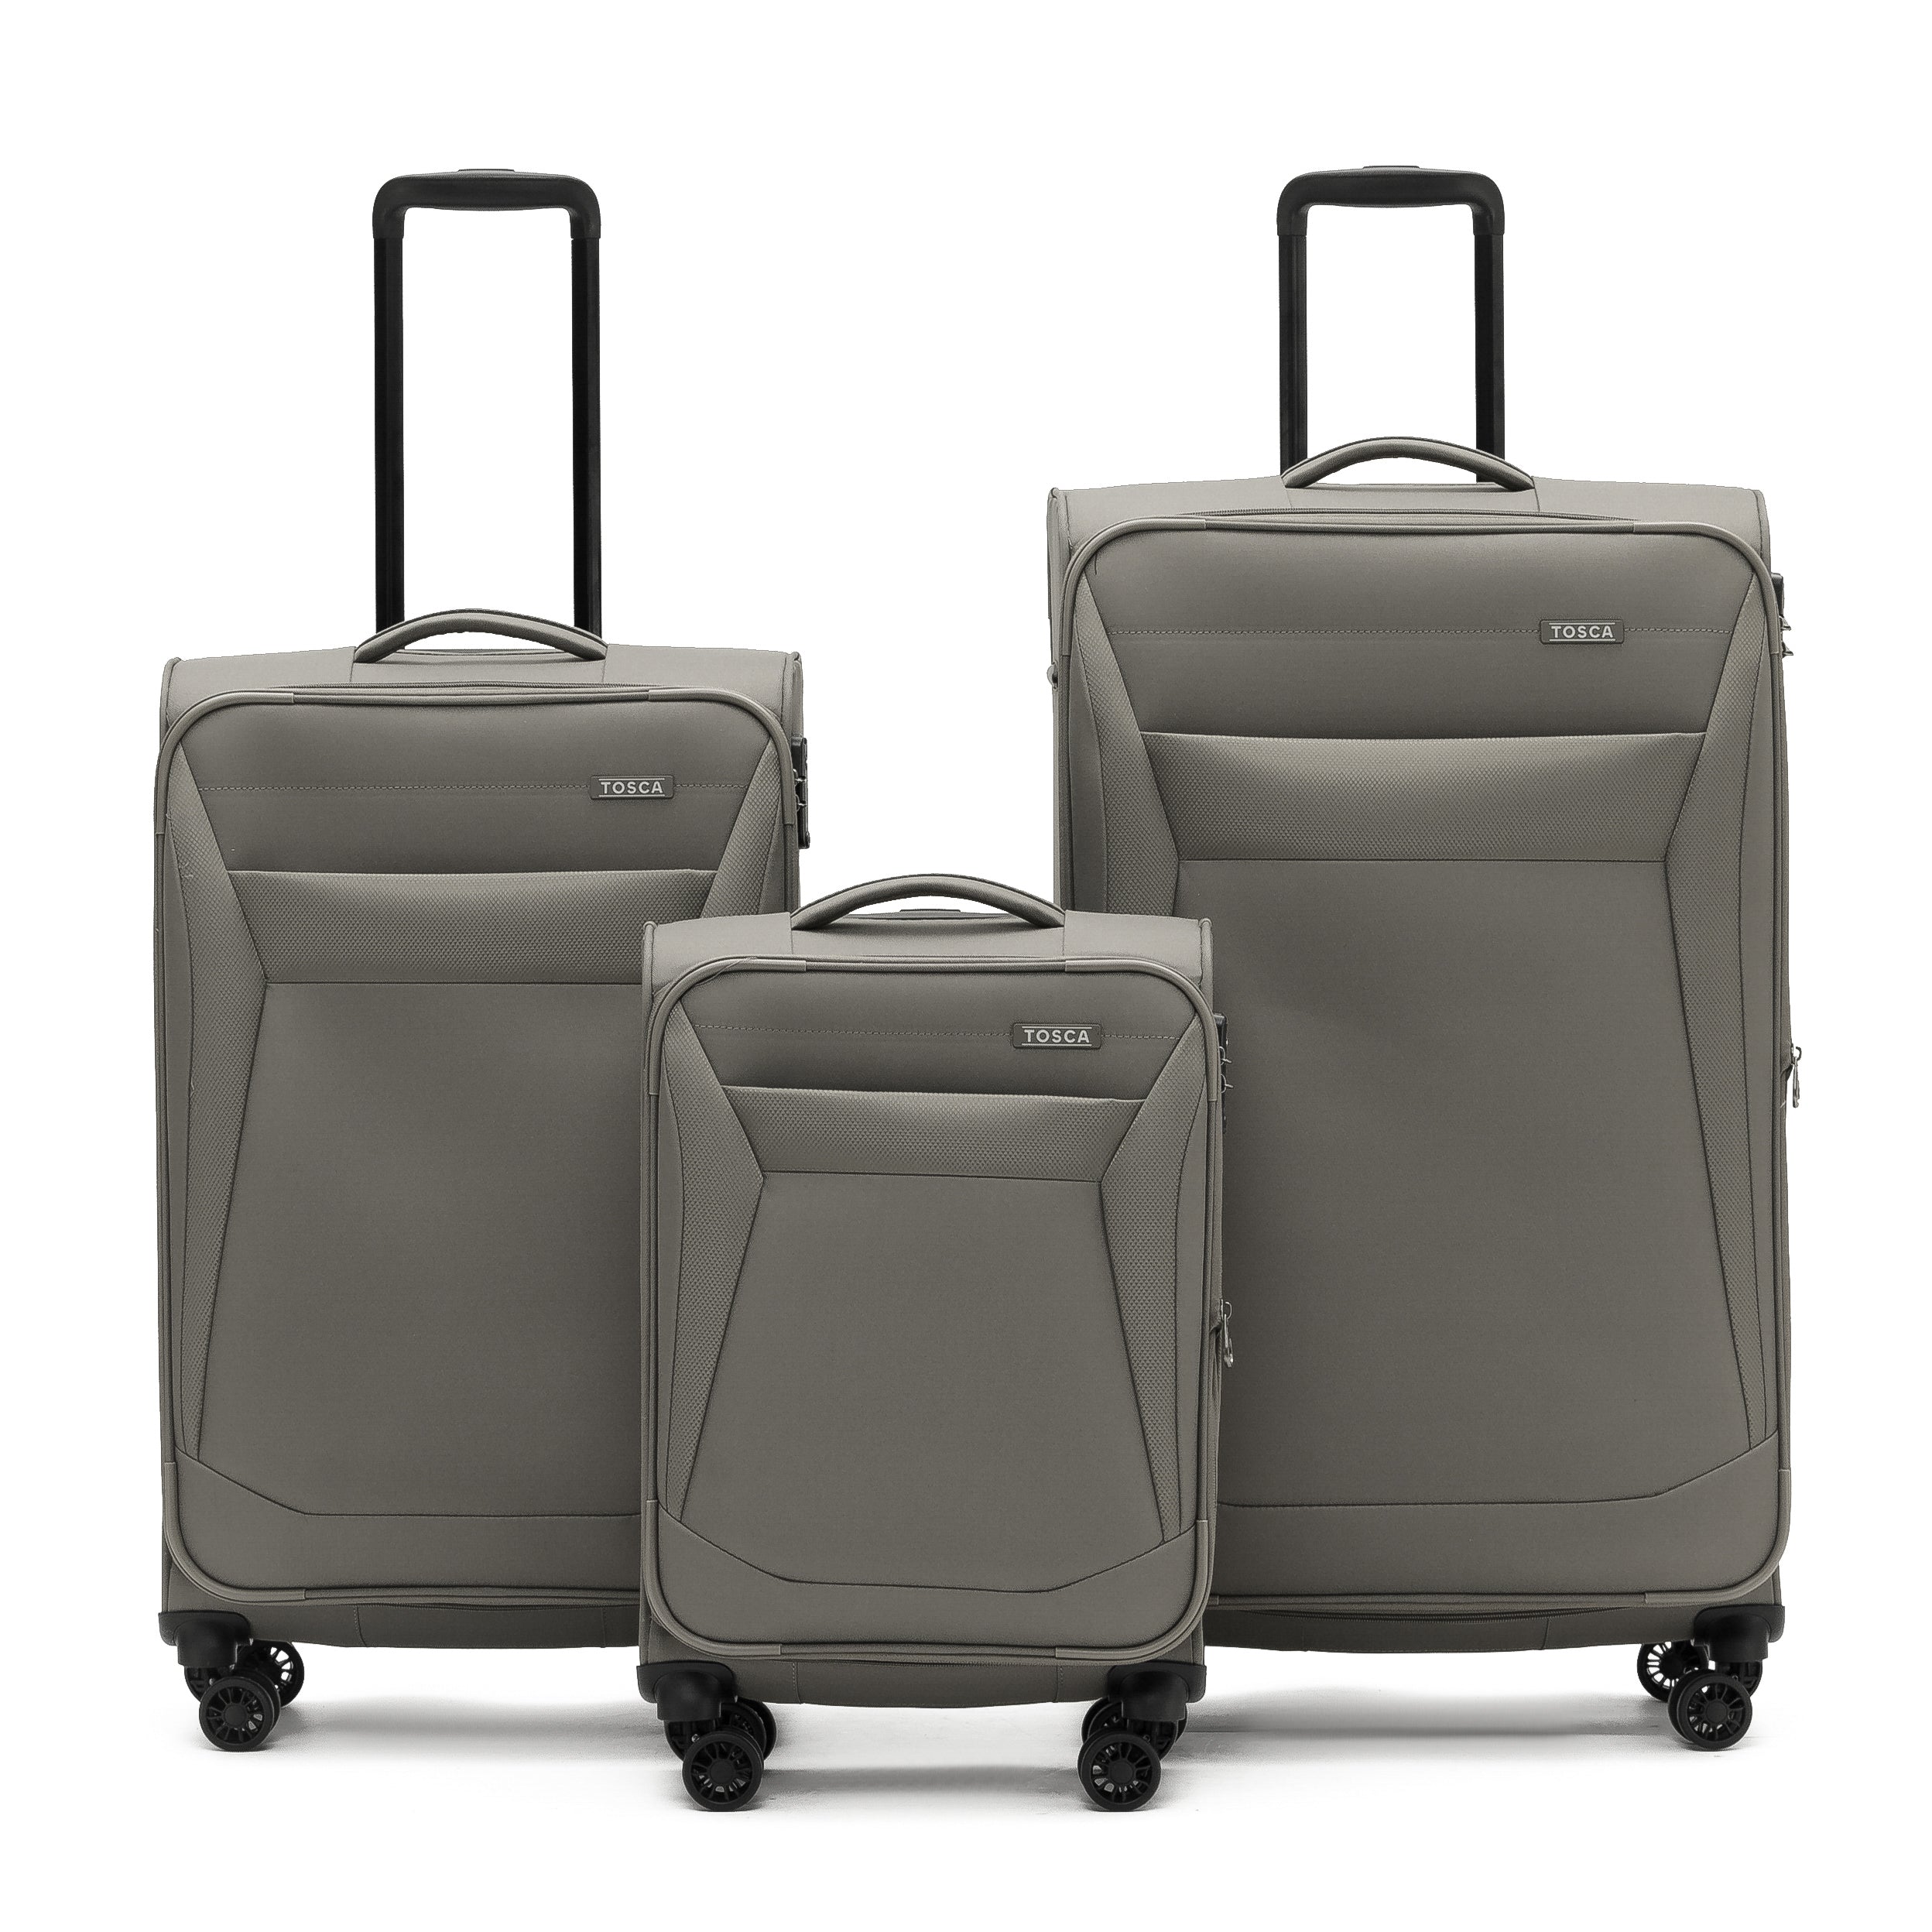 Tosca - Aviator 2.0 set of 3 suitcases (L-M-S) - Khaki-1